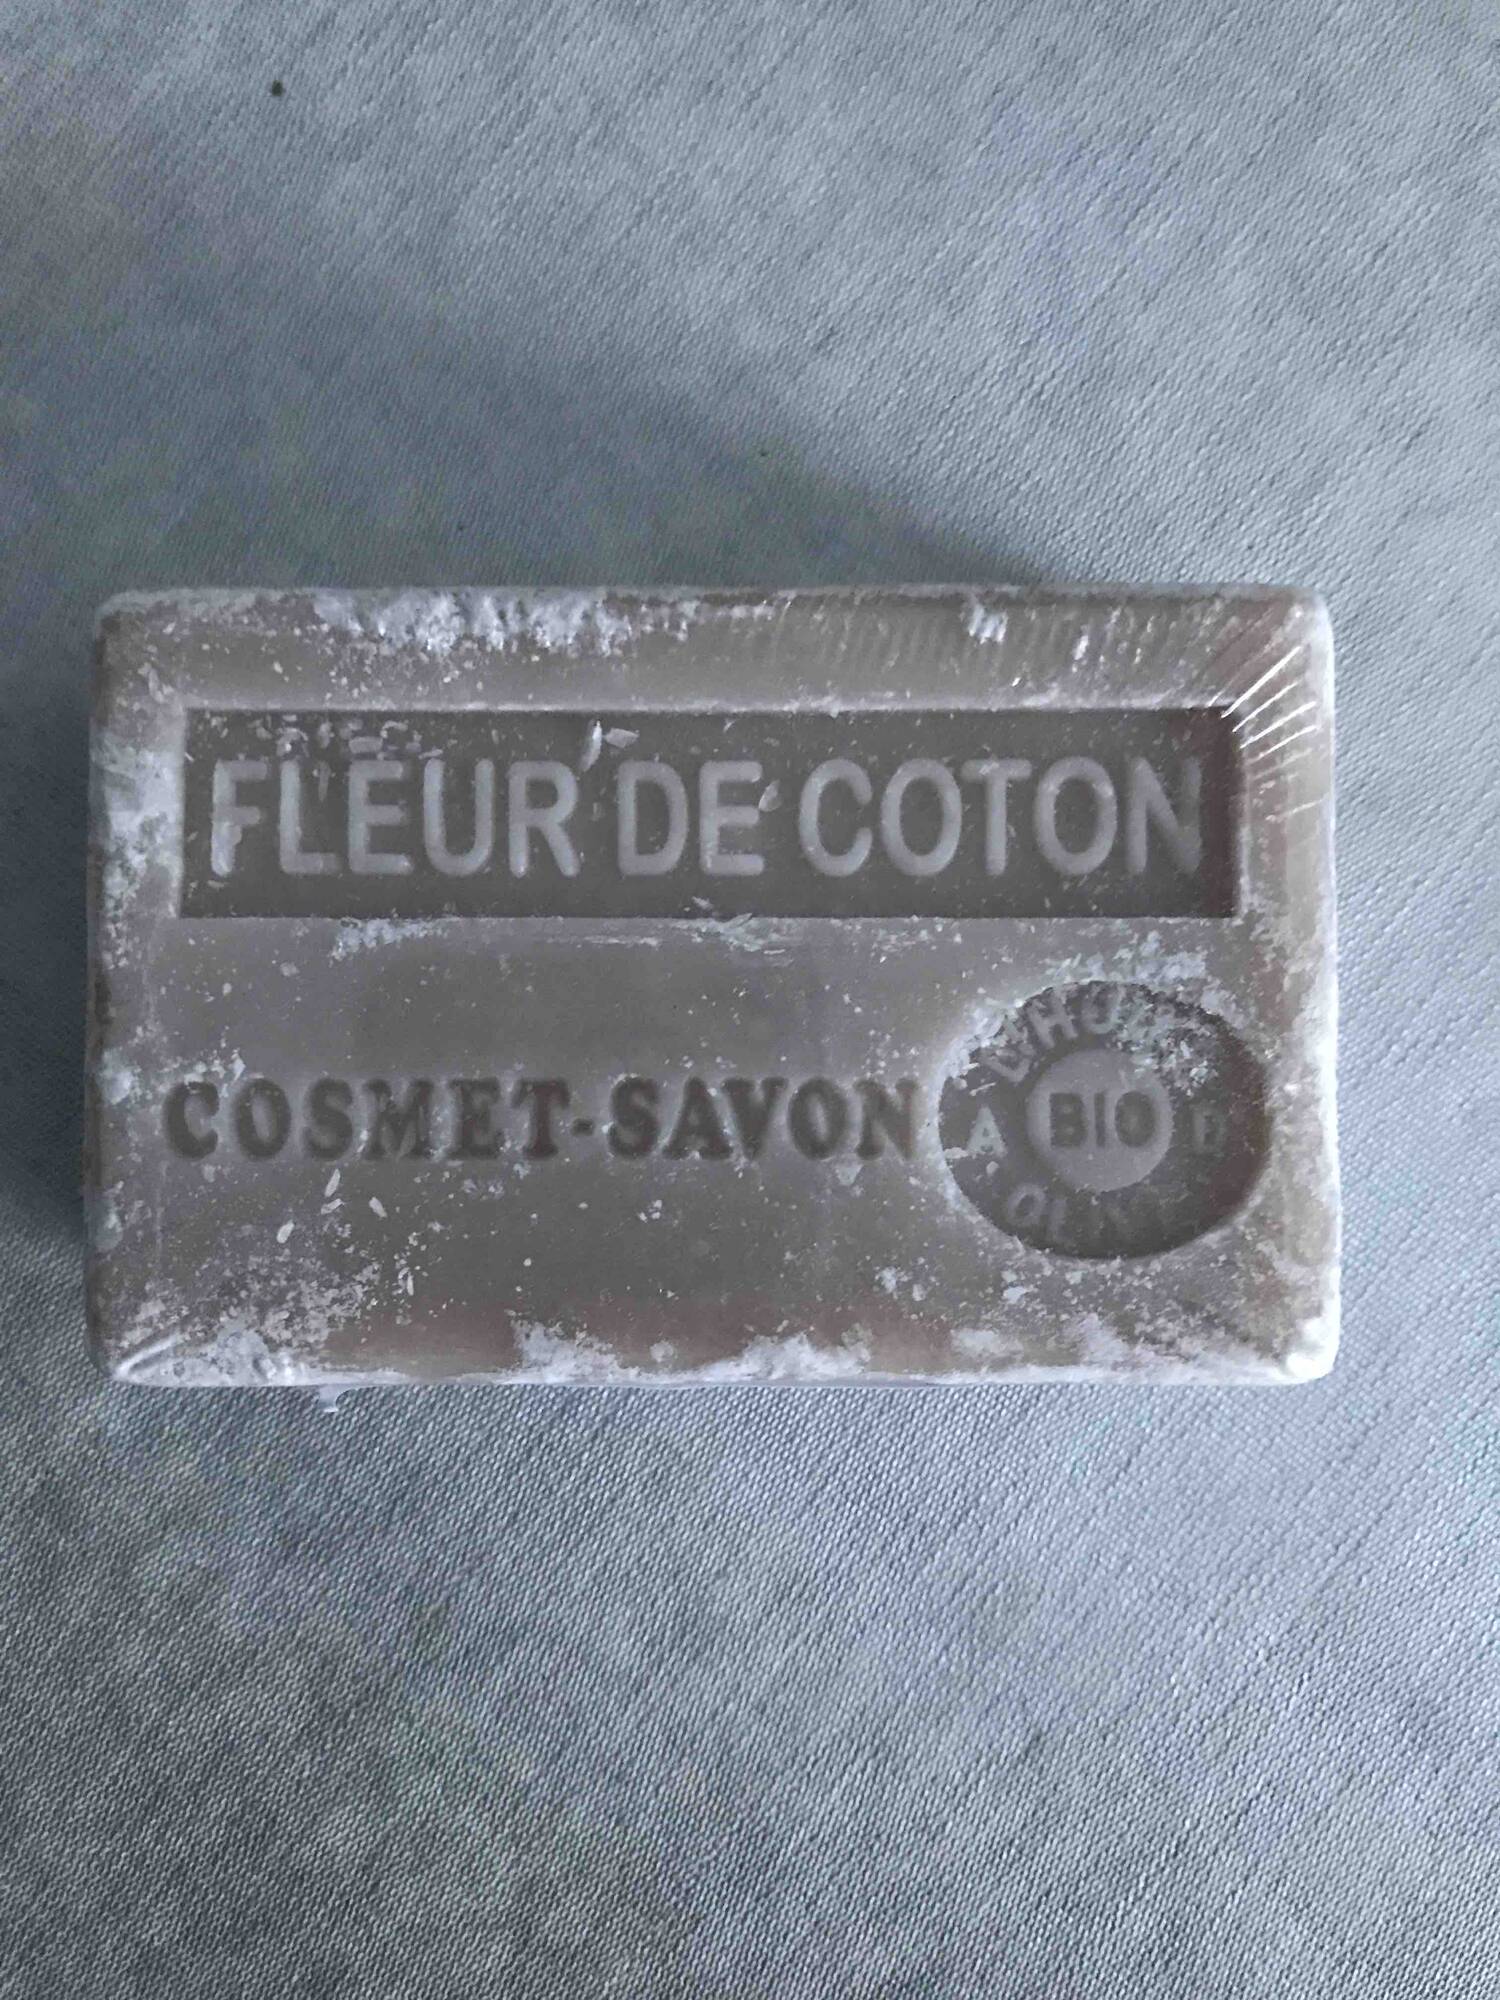 COSMET SAVON - Savon fleur de coton